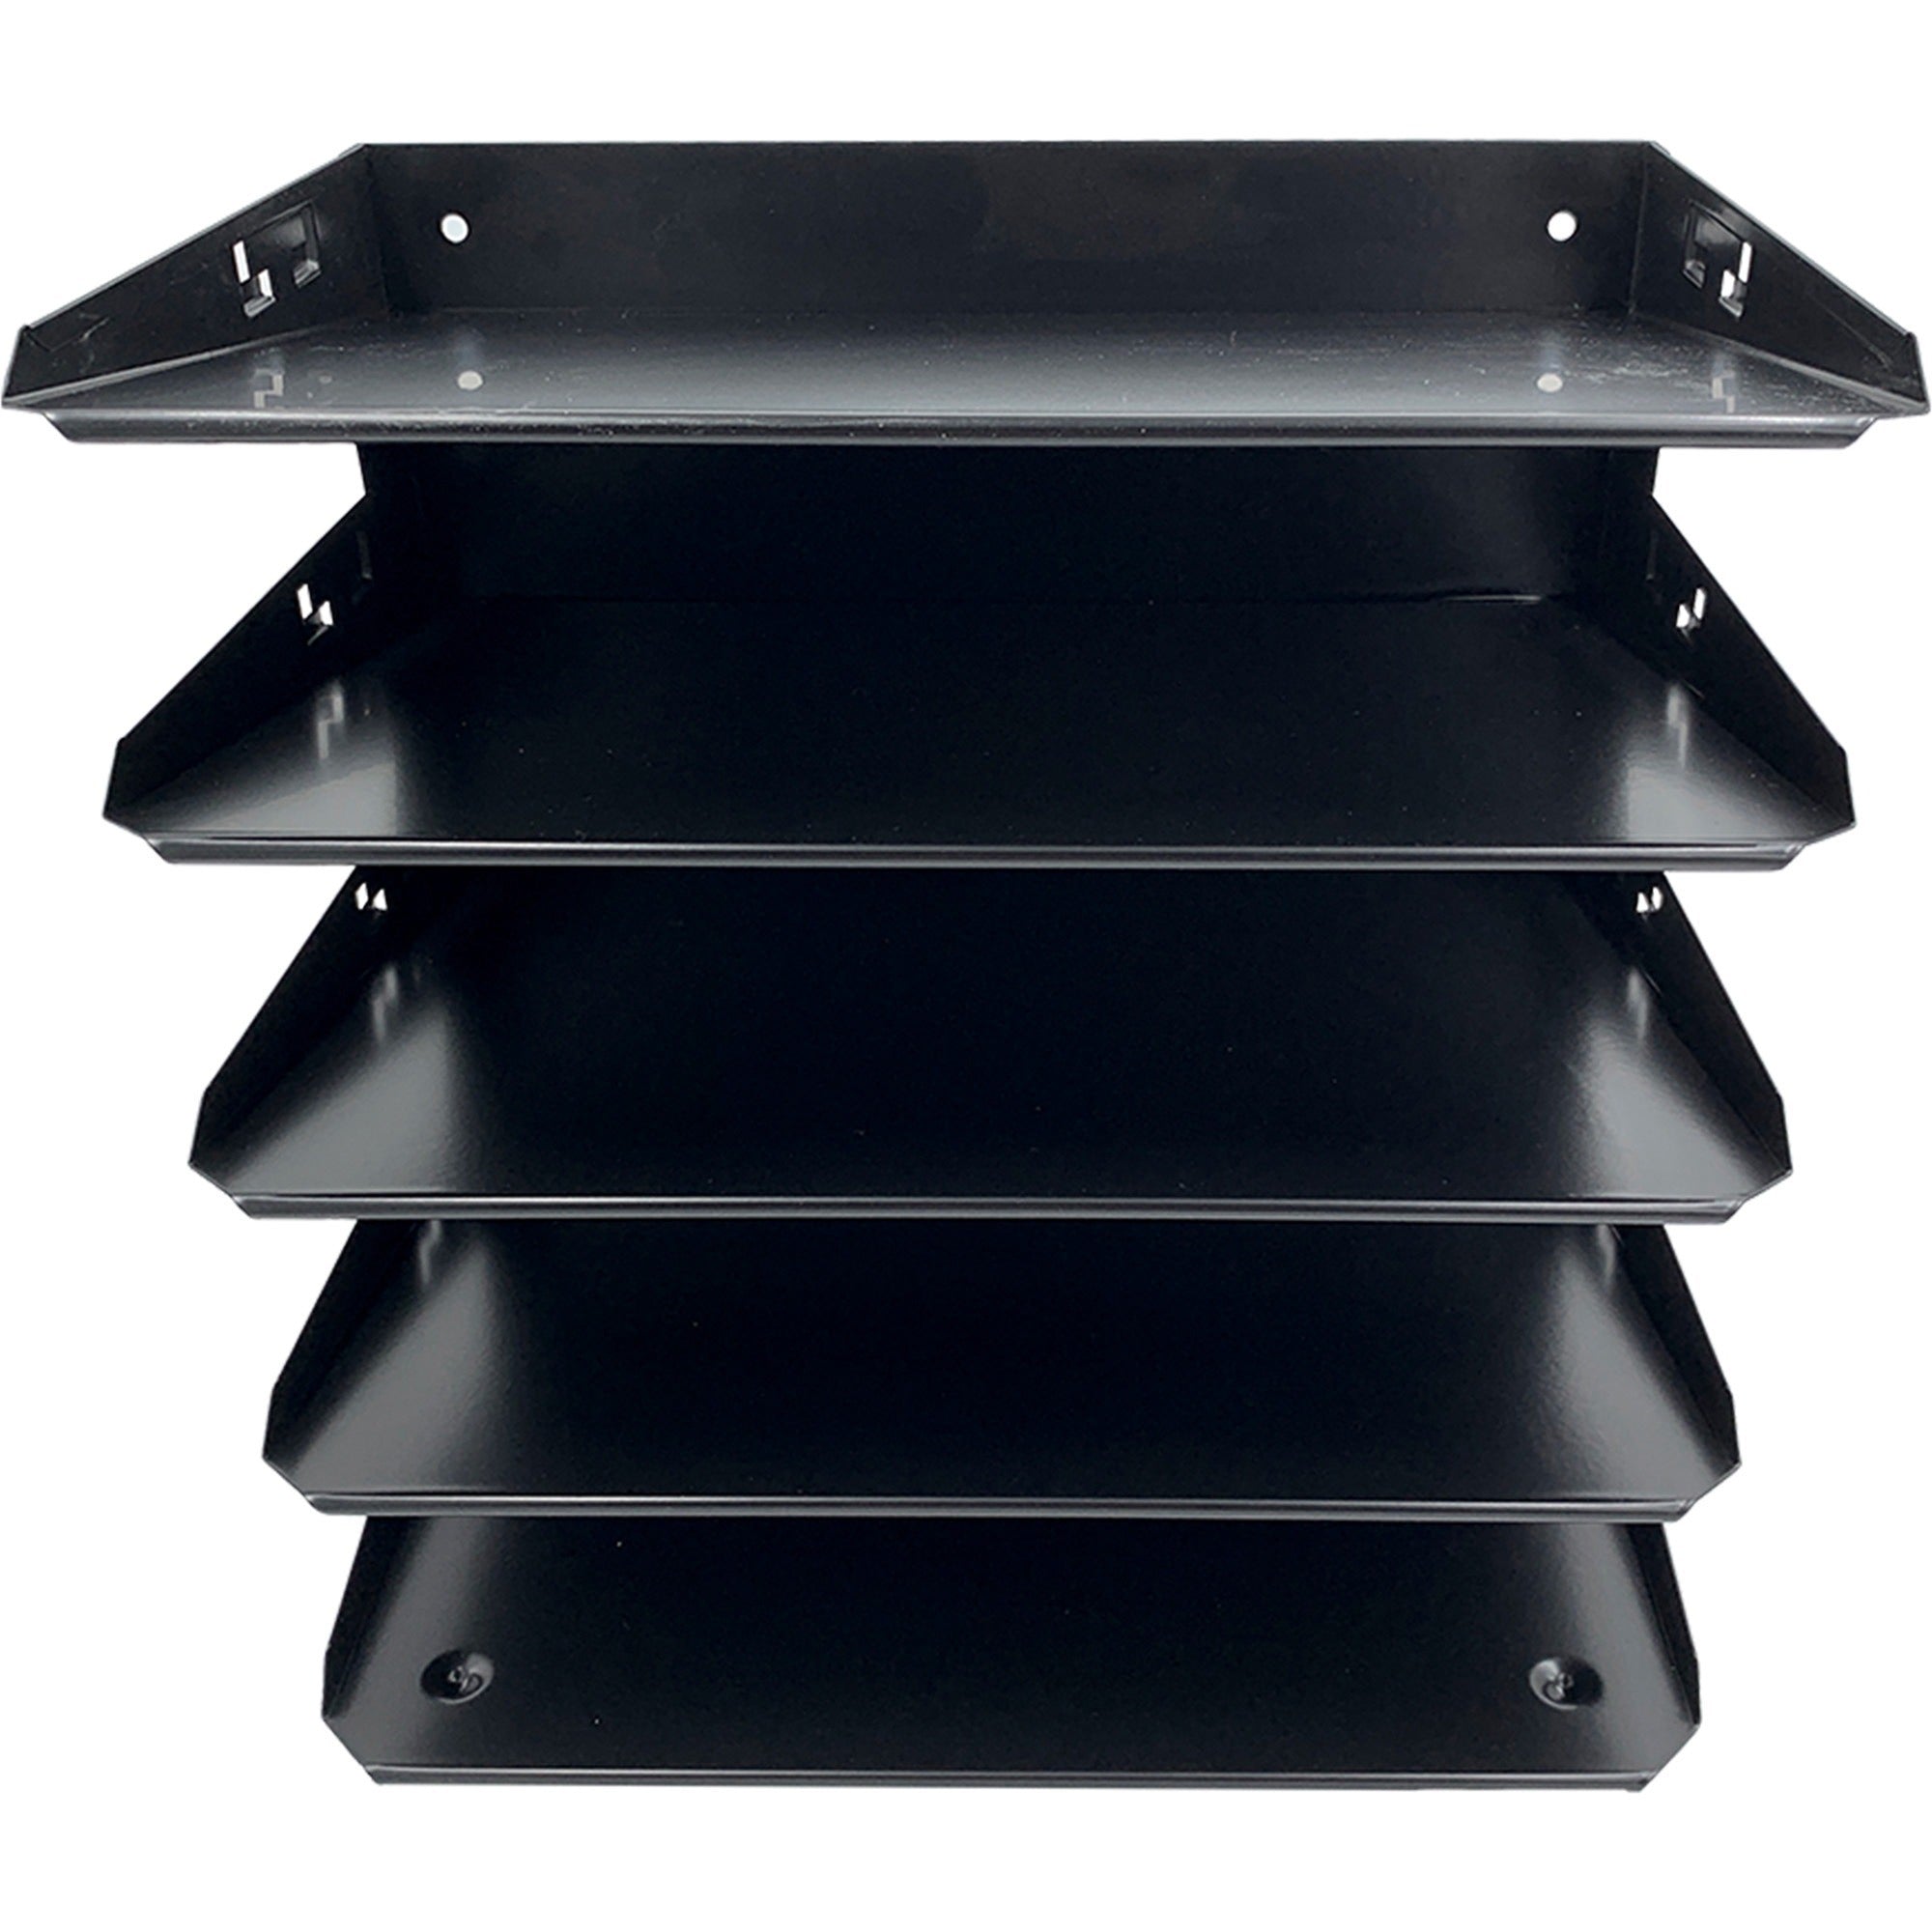 huron-horizontal-slots-desk-organizer-5-compartments-horizontal-12-height-x-88-width-x-12-depth-durable-black-steel-1-each_hurhasz0149 - 2